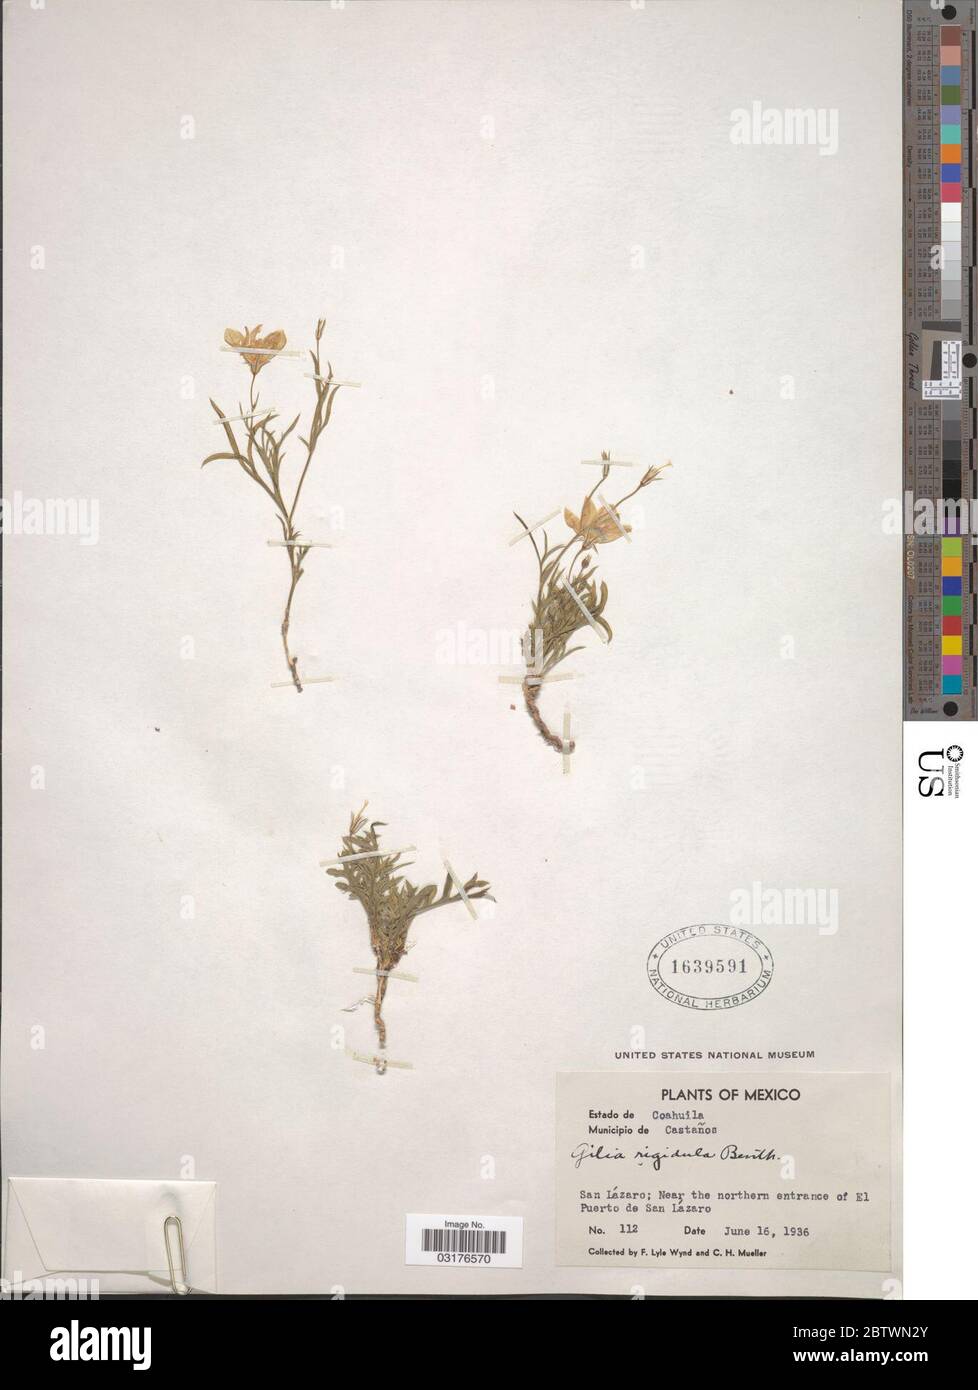 Gilia rigidula Benth. Stock Photo